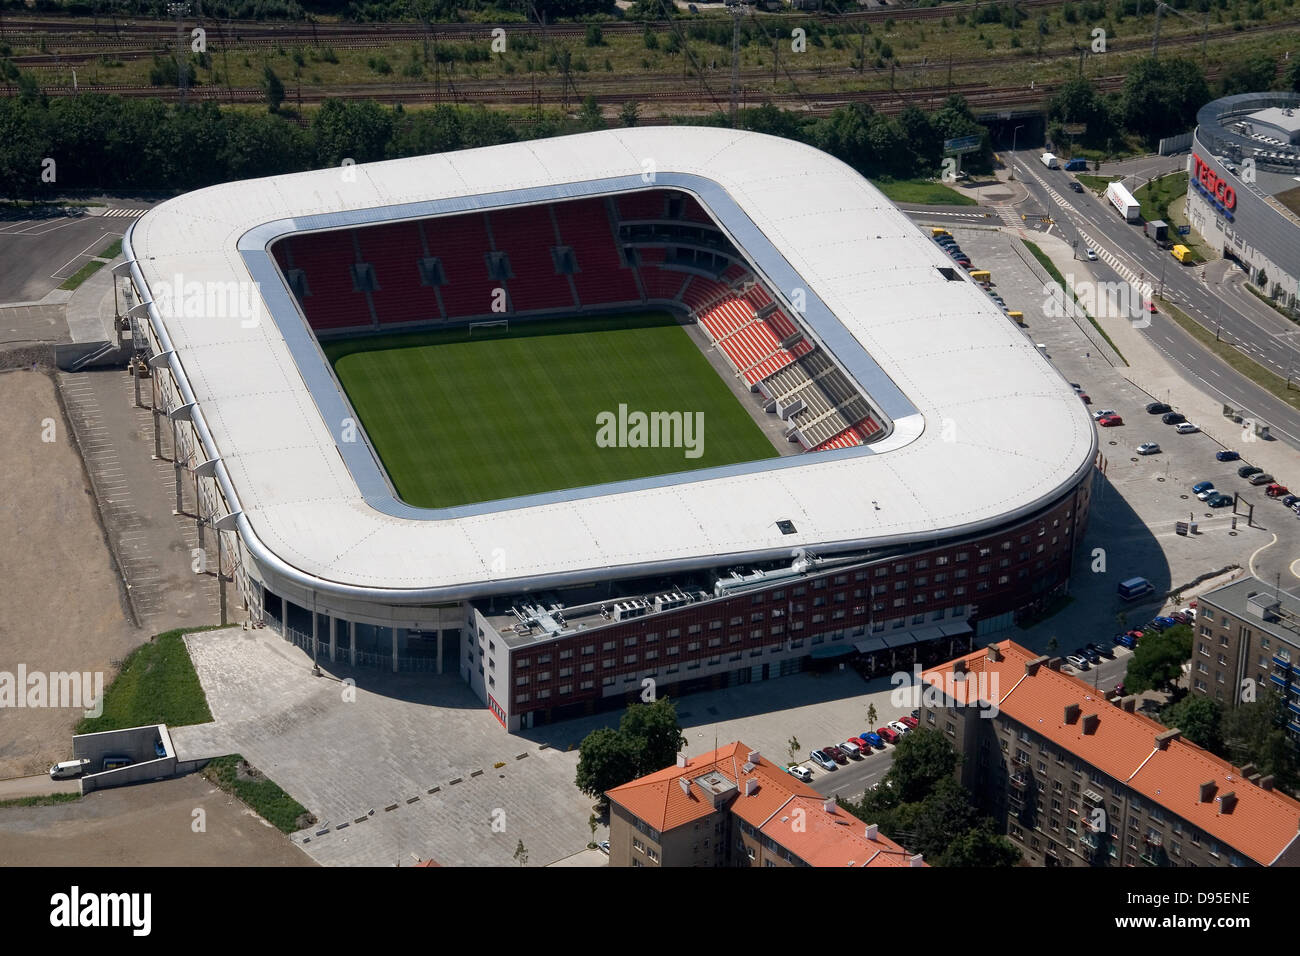 Slavia Prague soccer Stadium Eden Stock Photo - Alamy